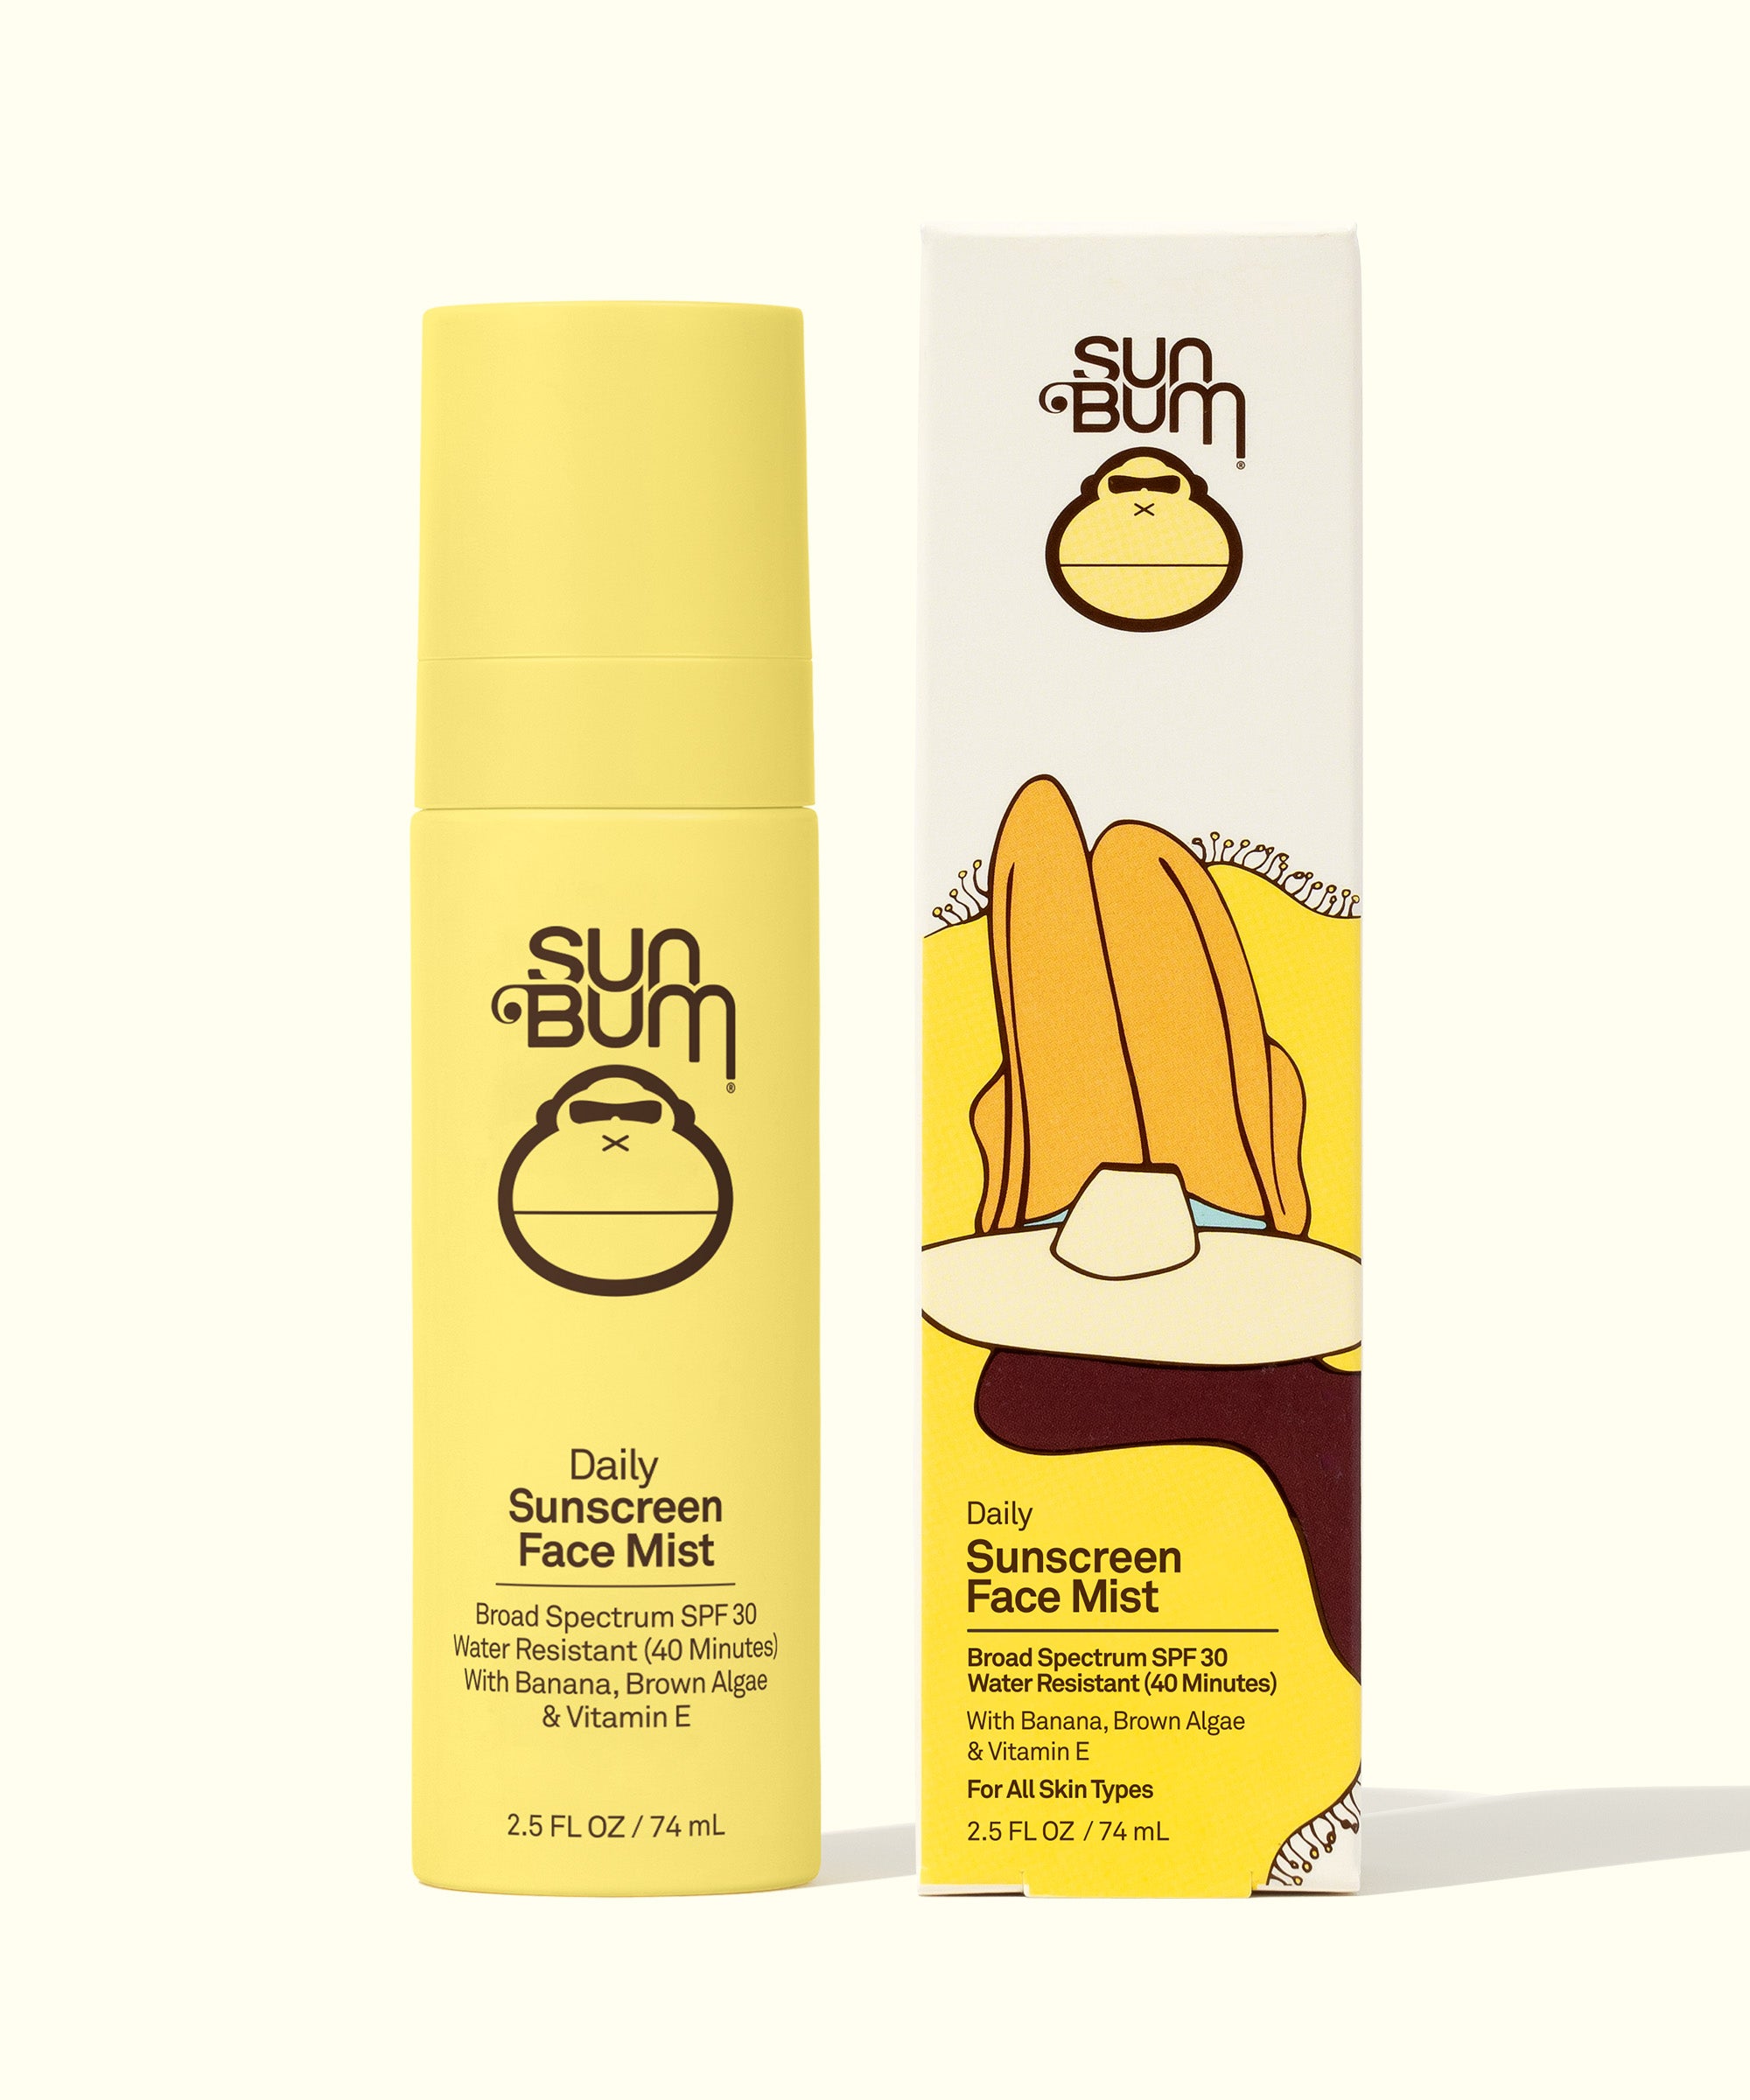 Daily Sunscreen Face Mist SPF 30